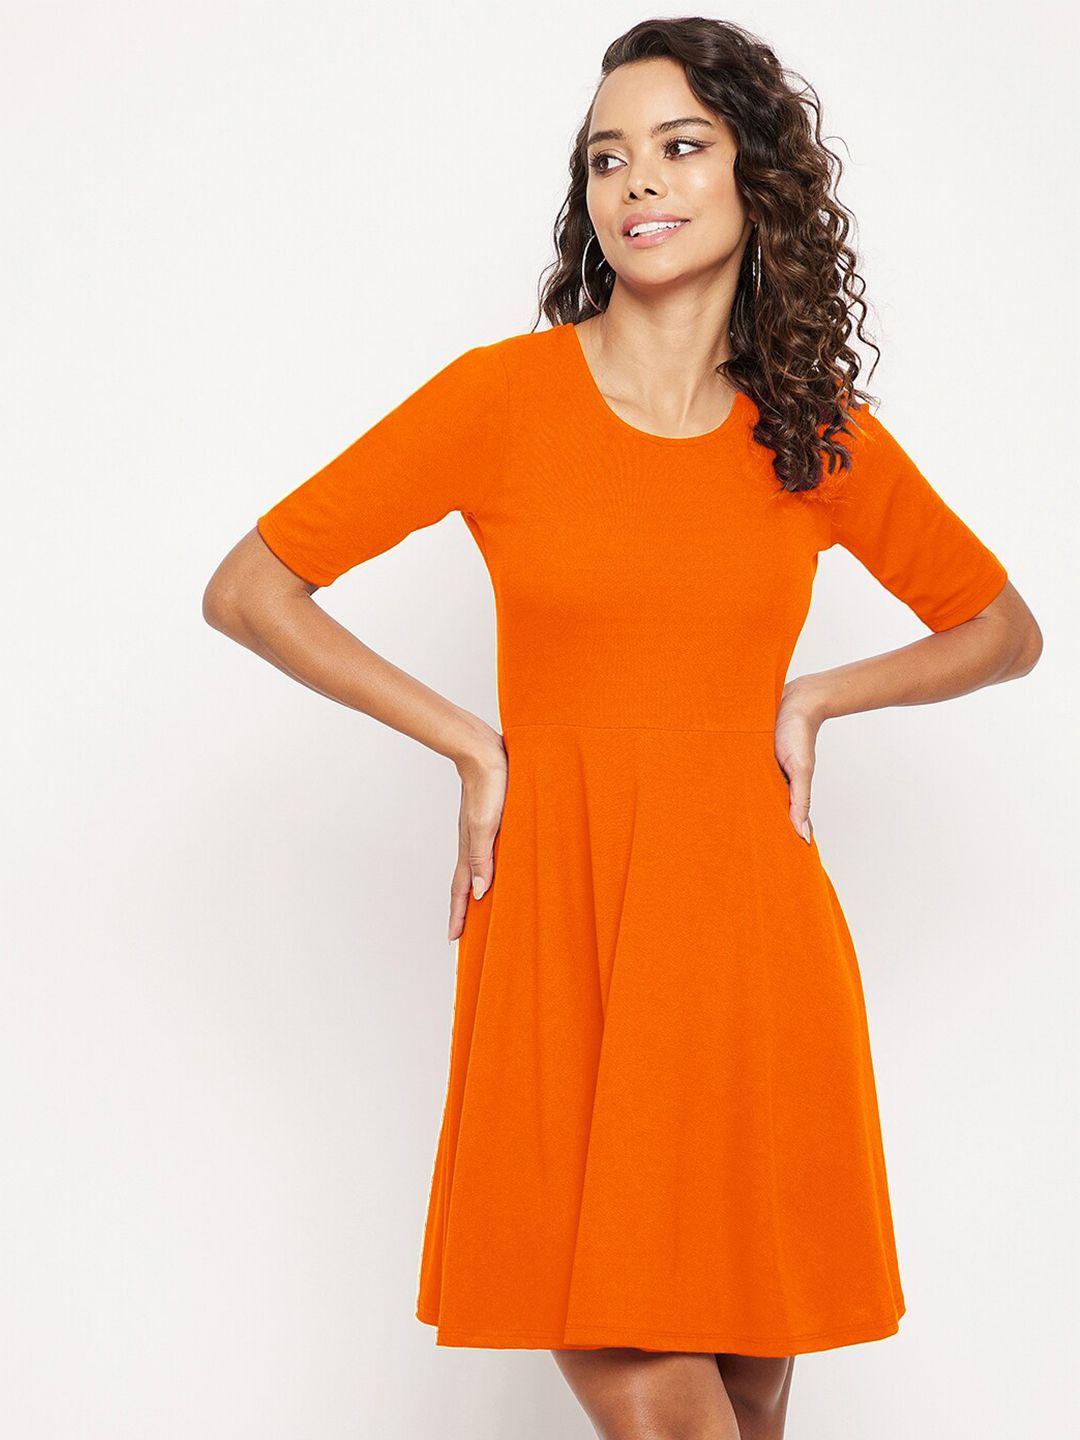 uptownie lite orange solid fit & flare dress